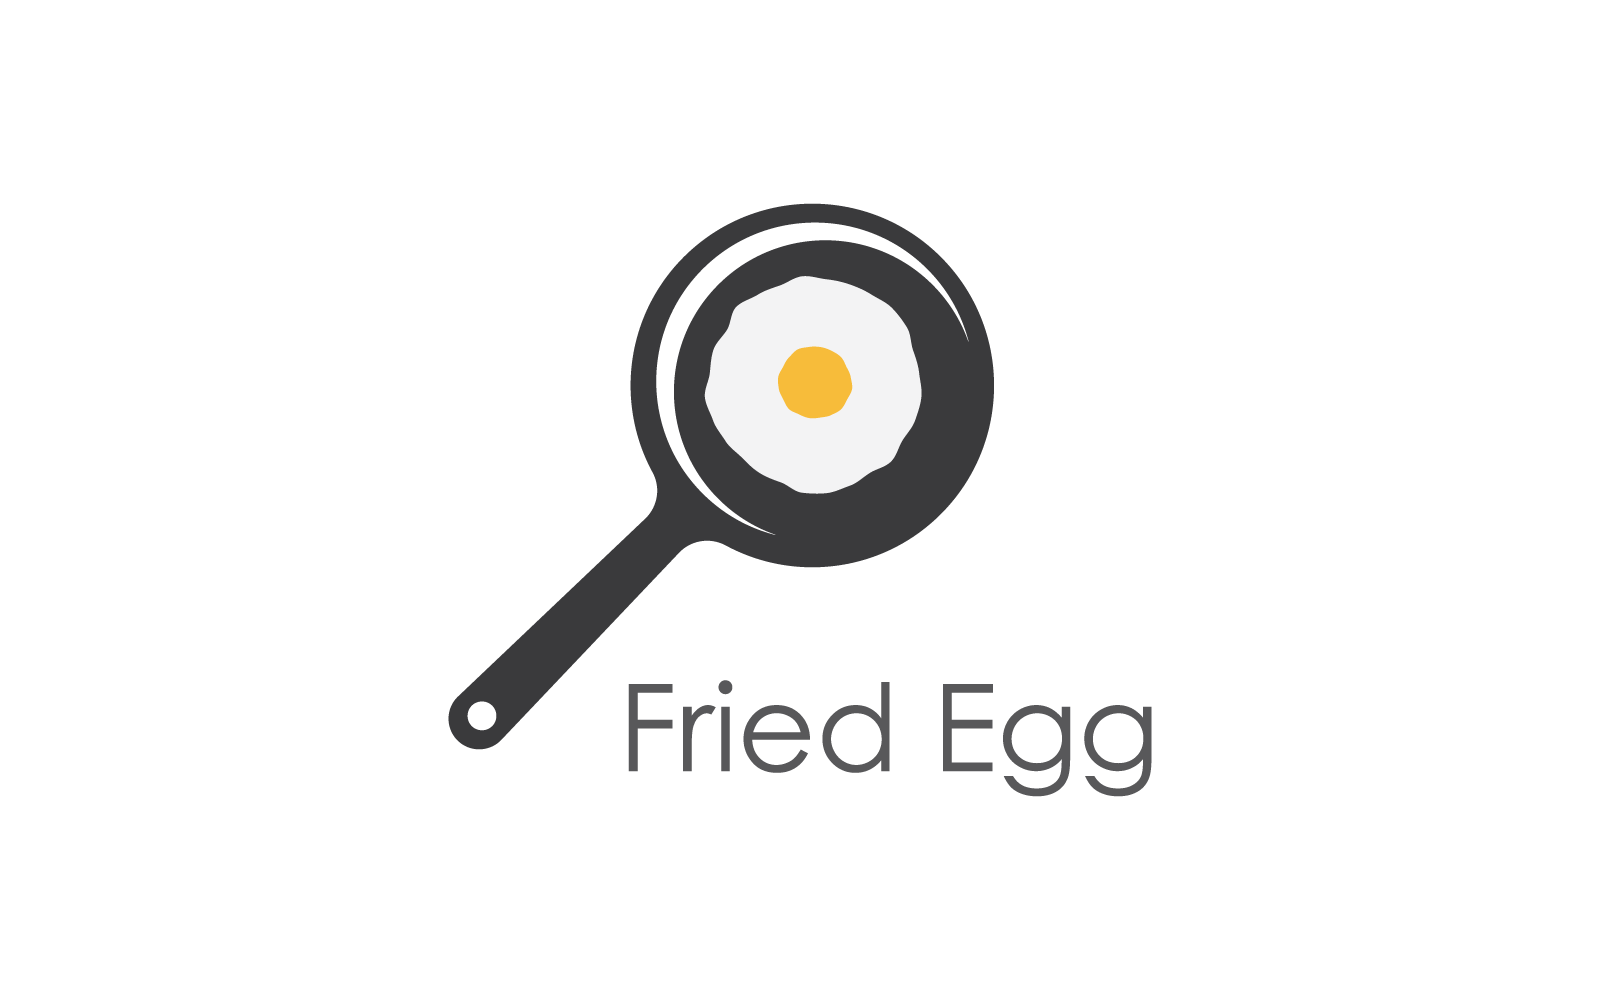 Fried egg illustration logo vector design